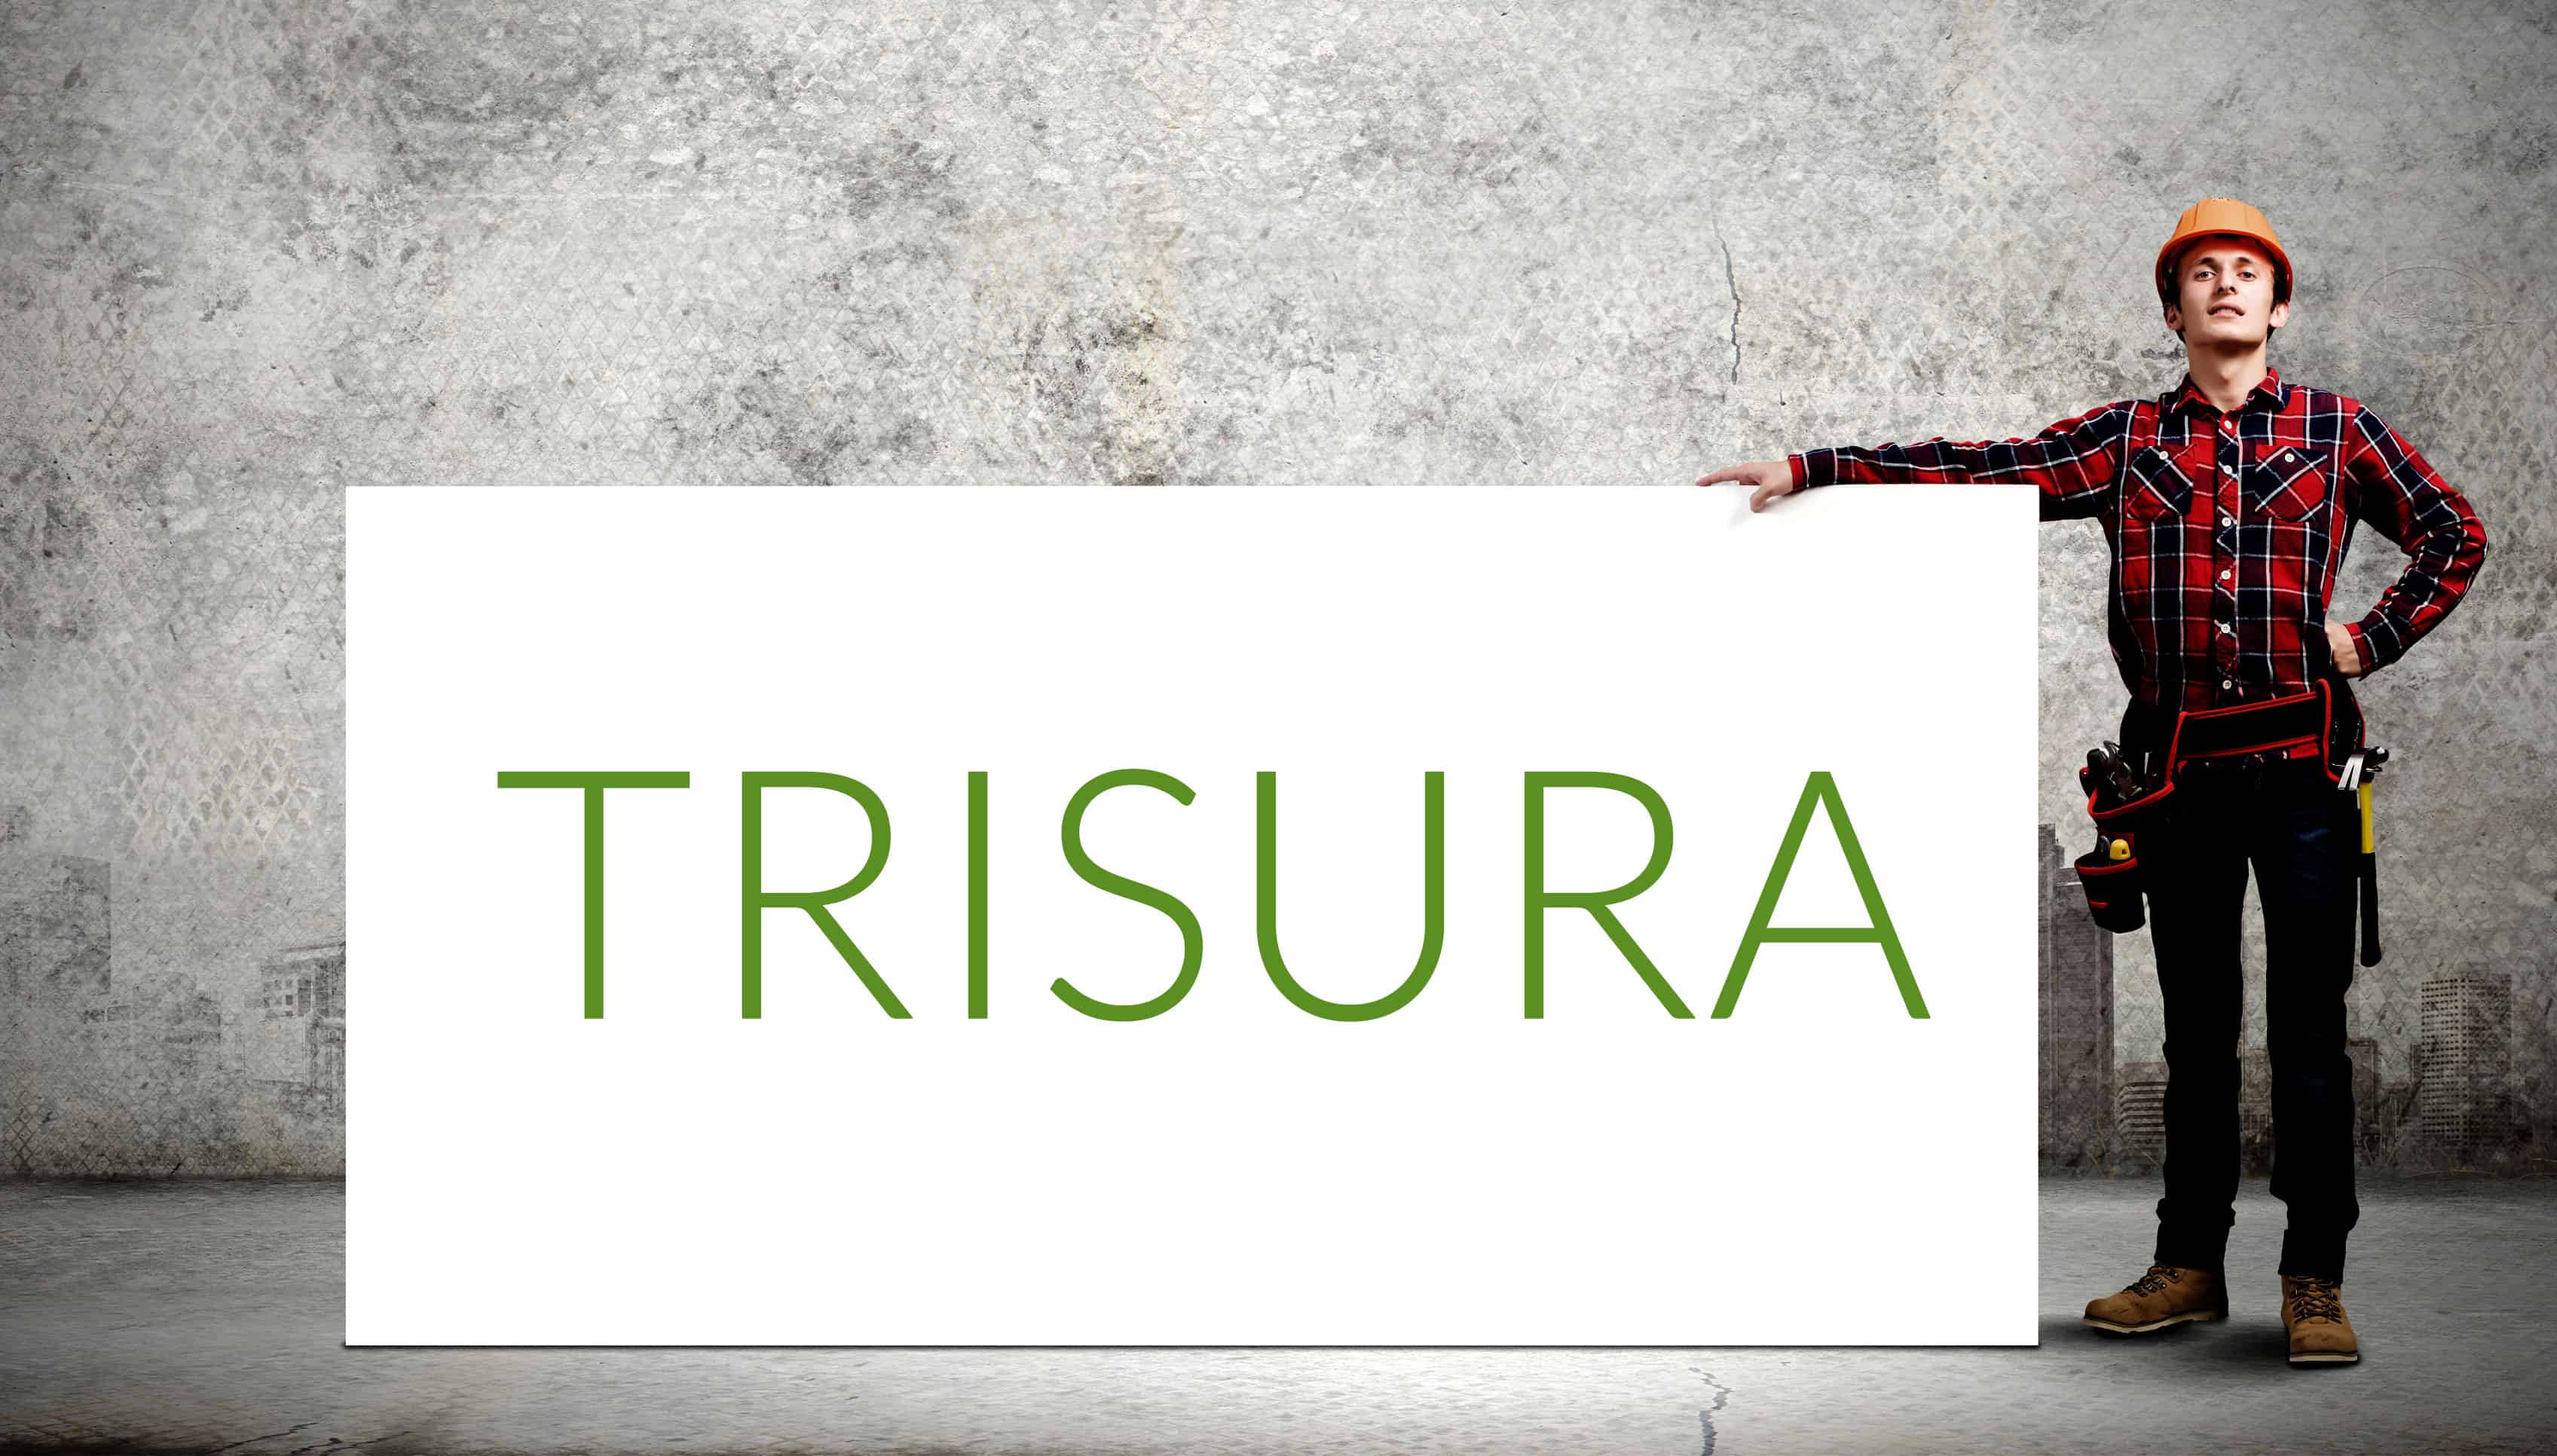 Builder Bonds backed by Trisura